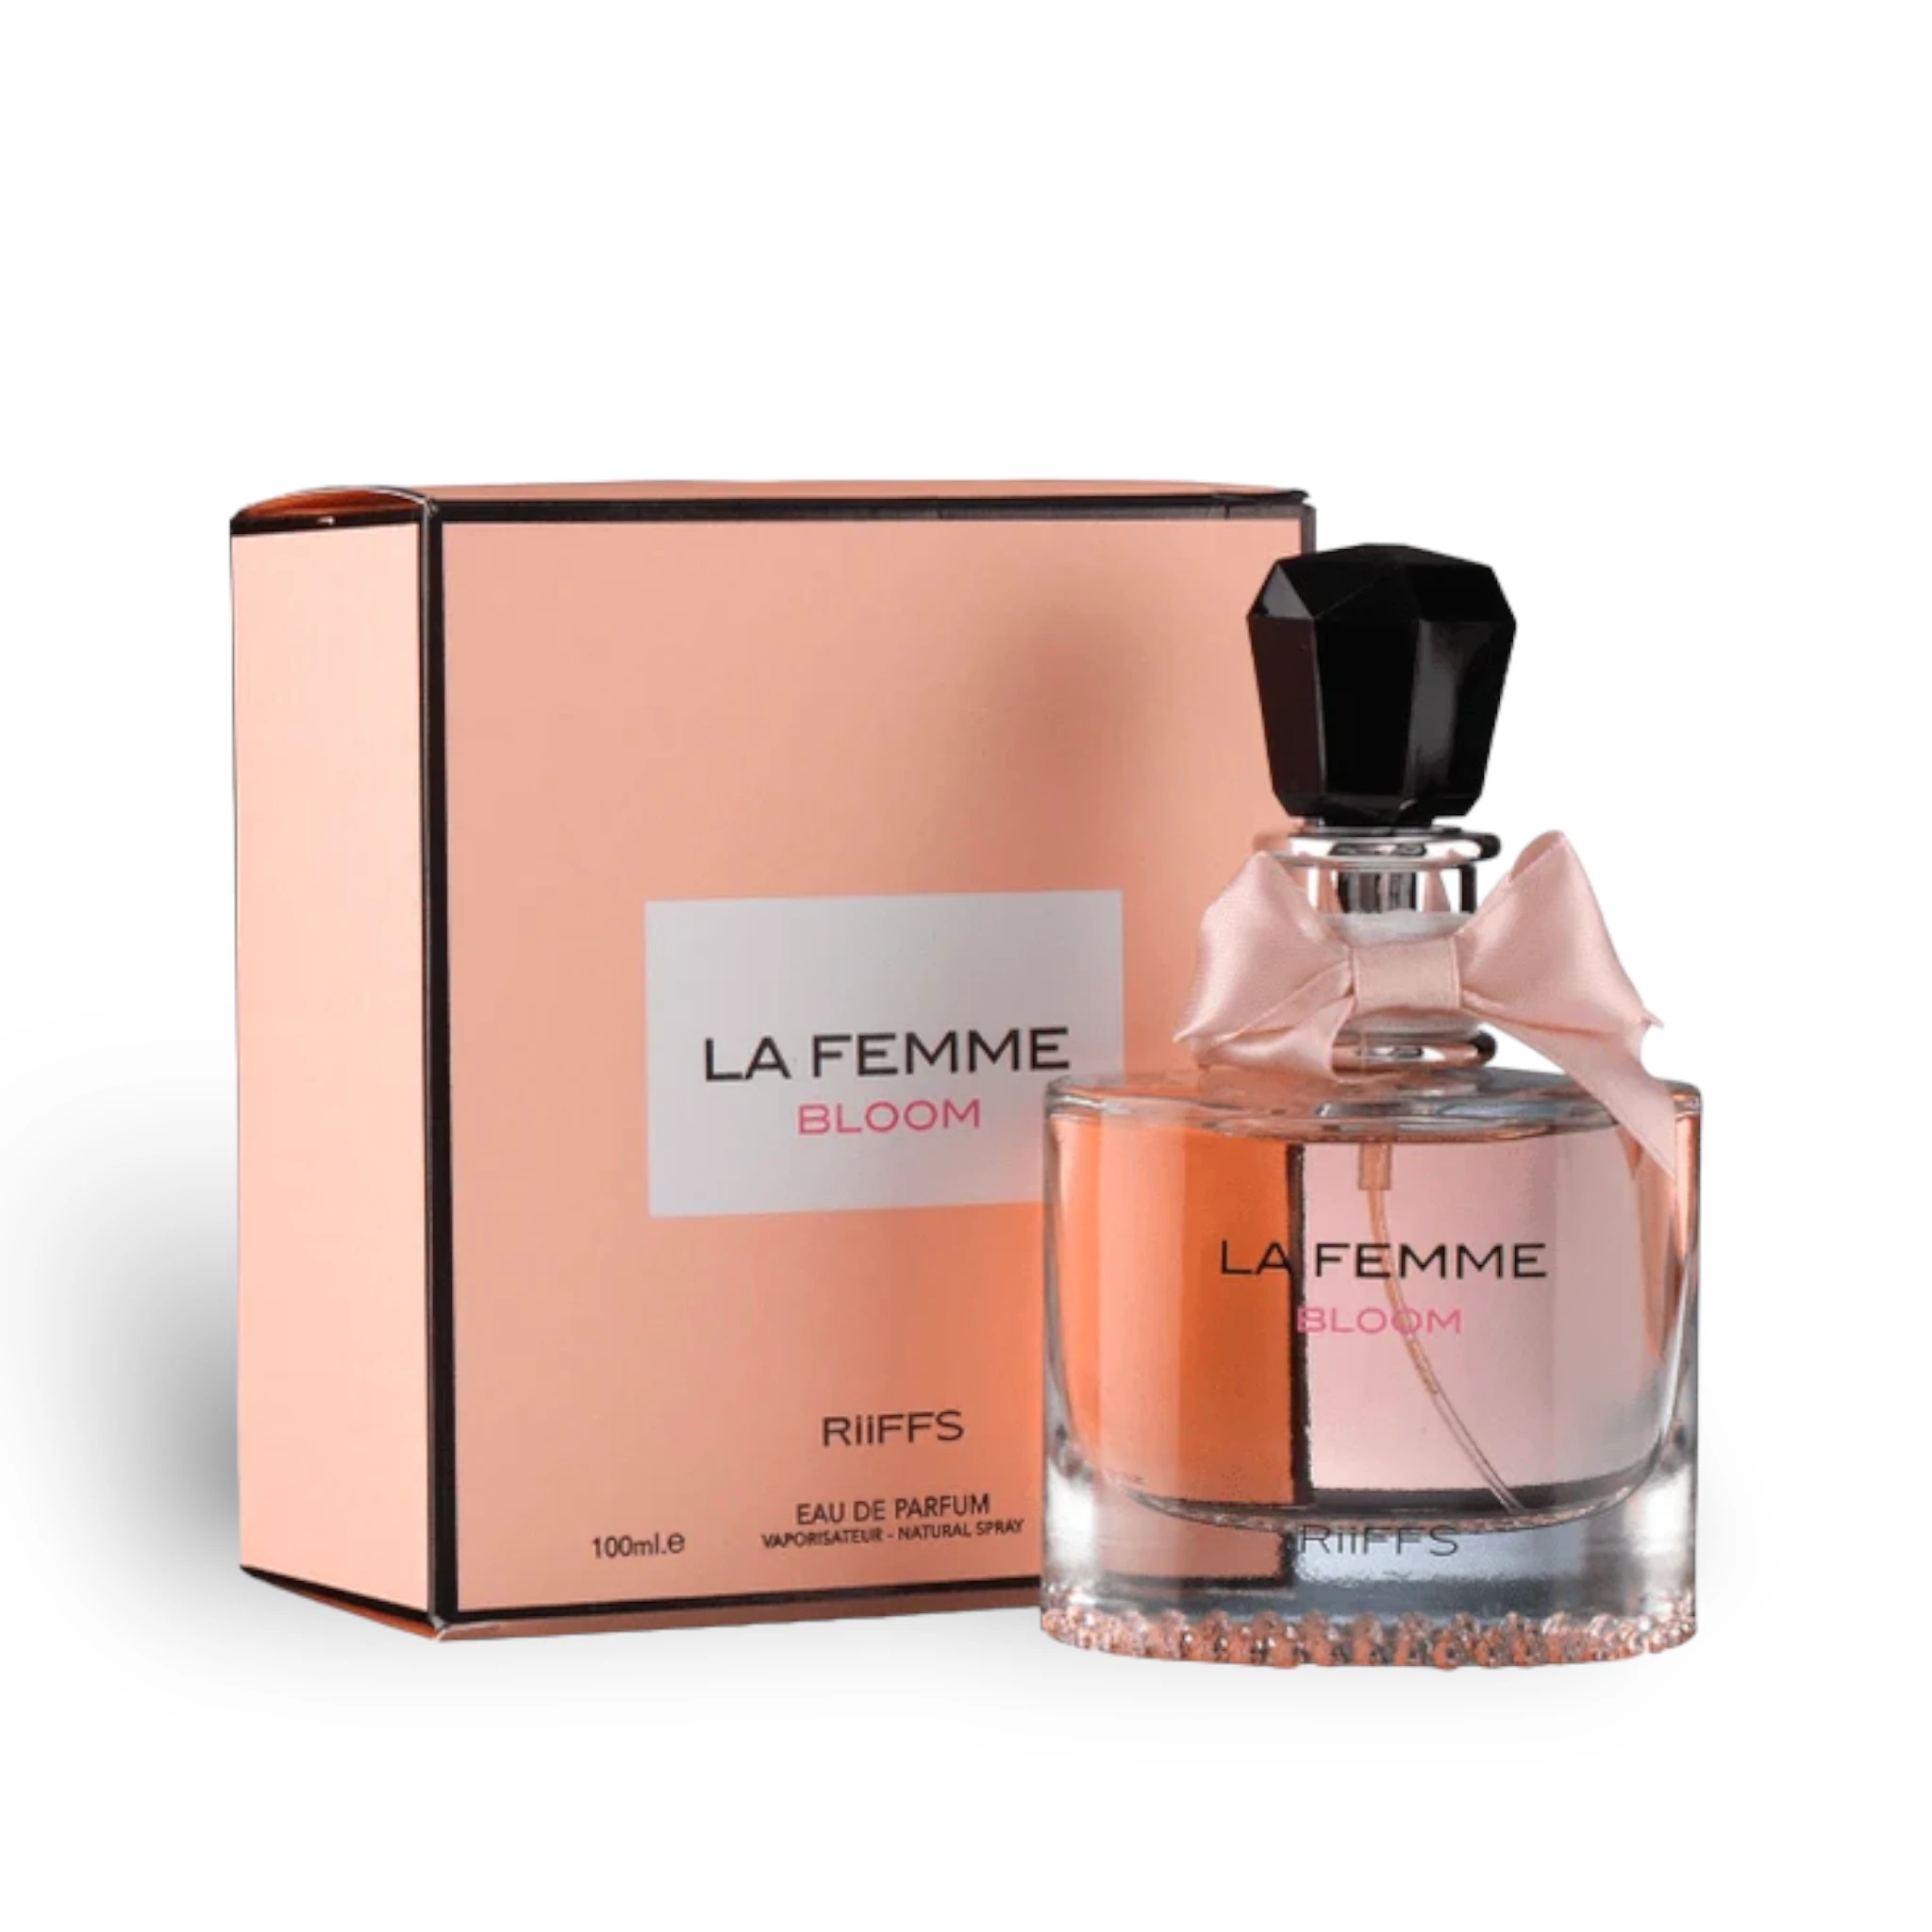 La Femme Bloom Perfume Eau De Parfum 100Ml By Riiffs